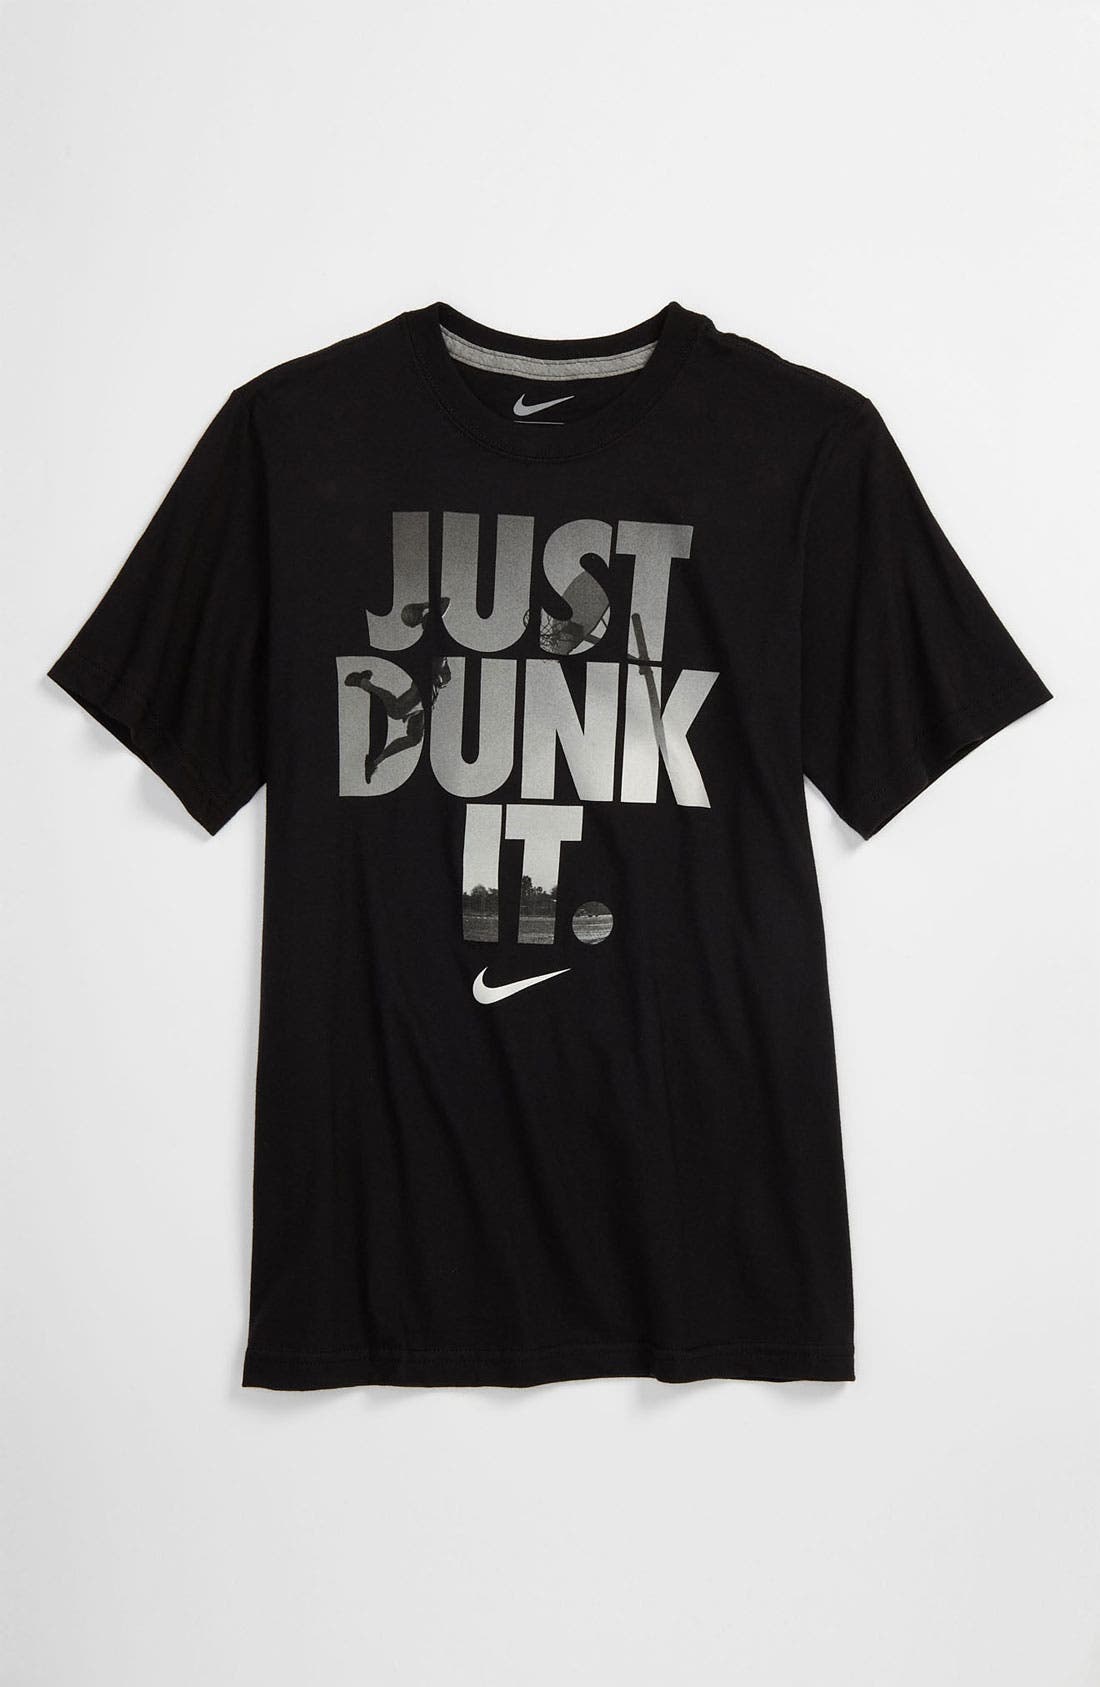 just dunk it nike shirt